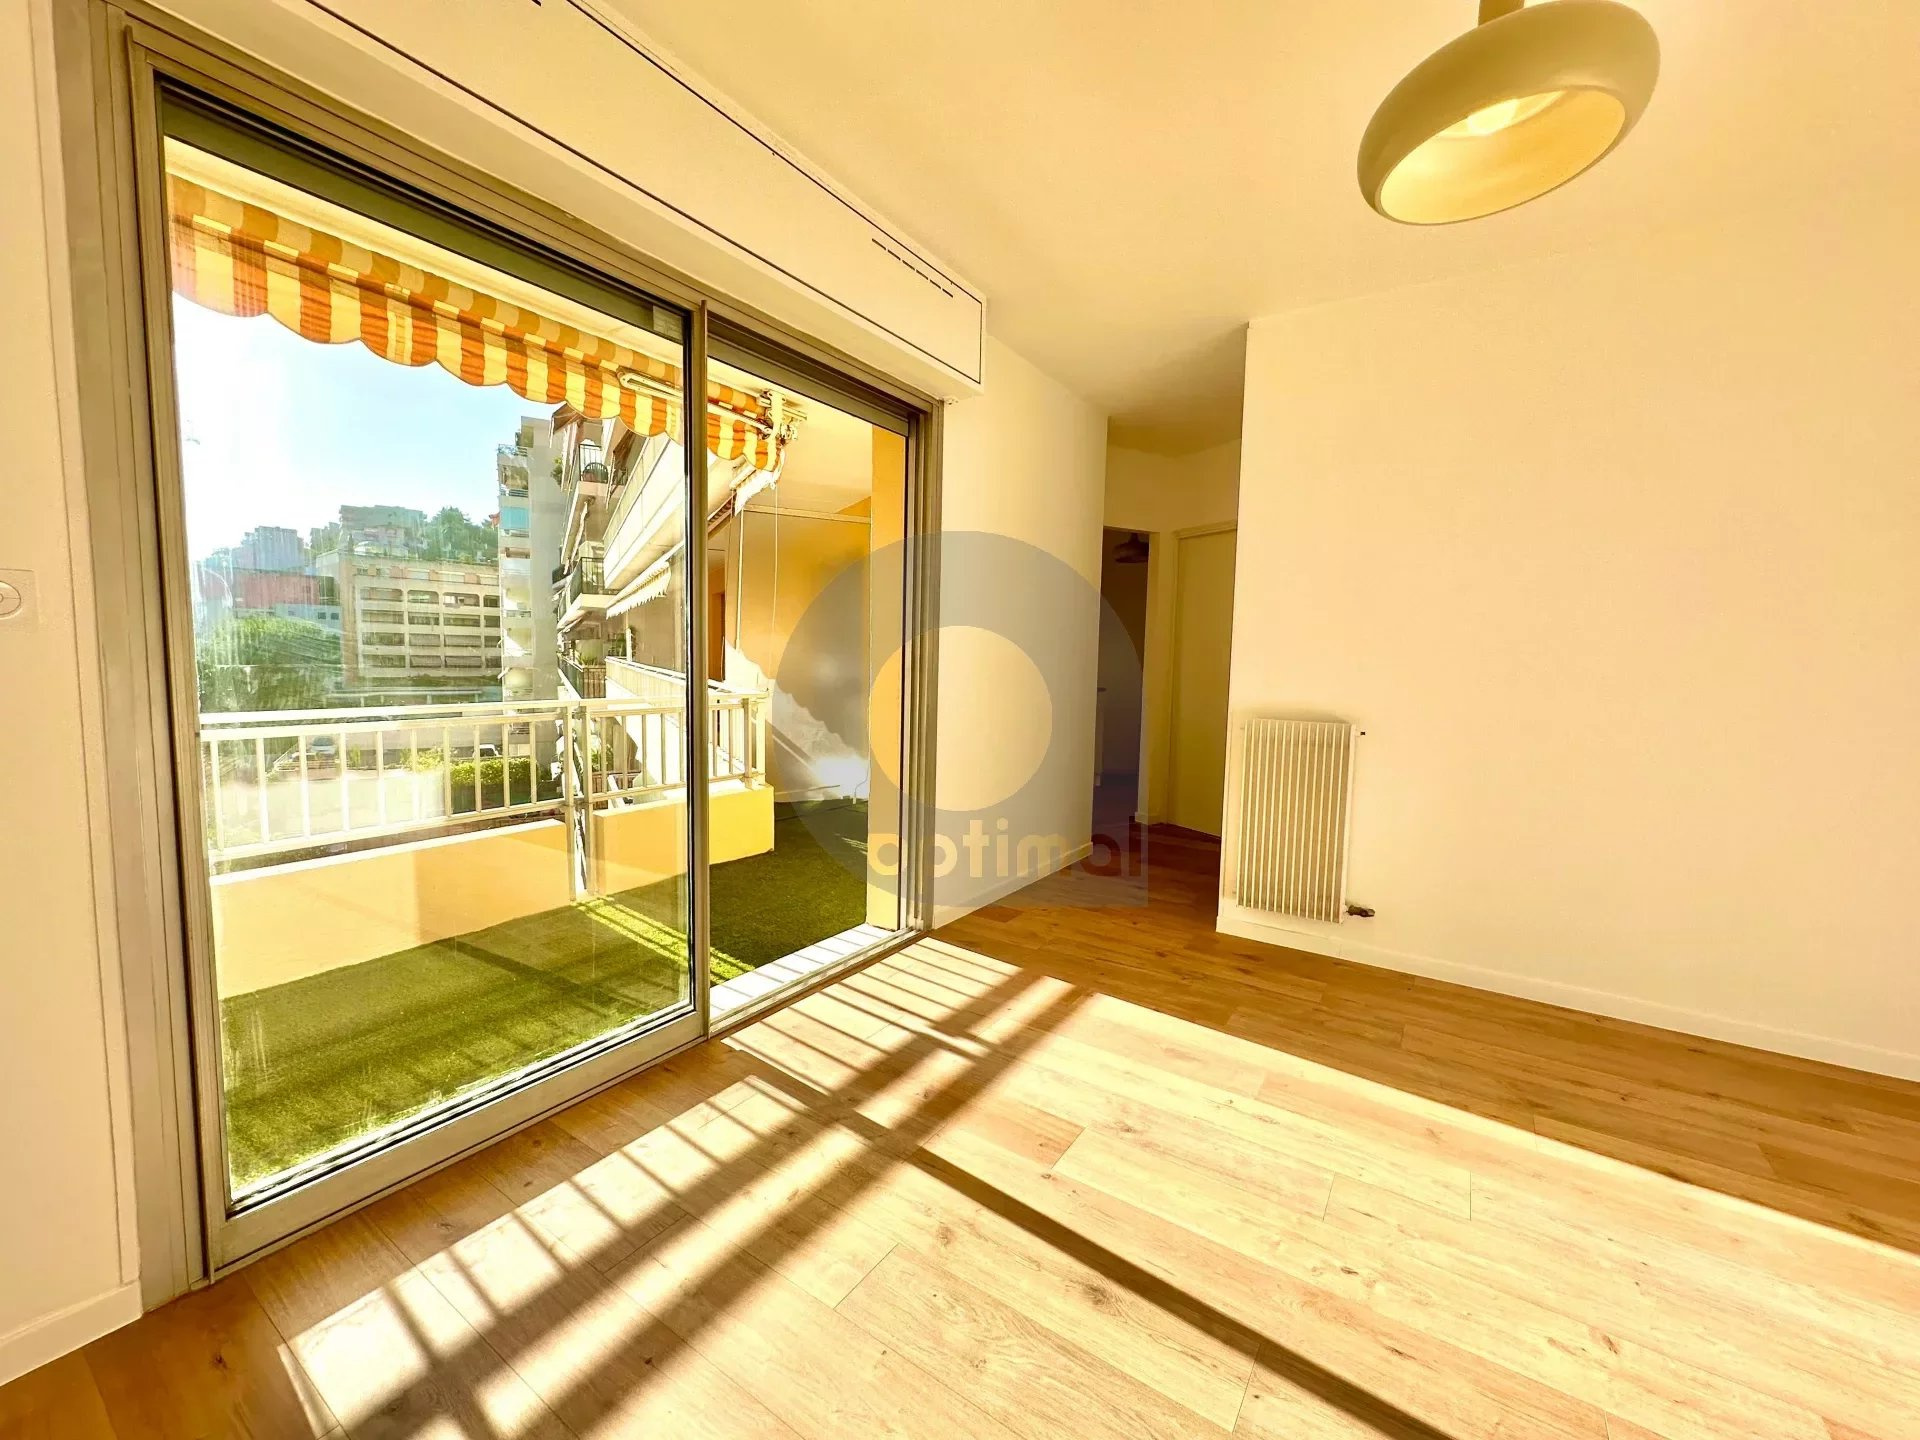 Vente Appartement 29m² 1 Pièce à Roquebrune-Cap-Martin (06190) - Inter Immobilier